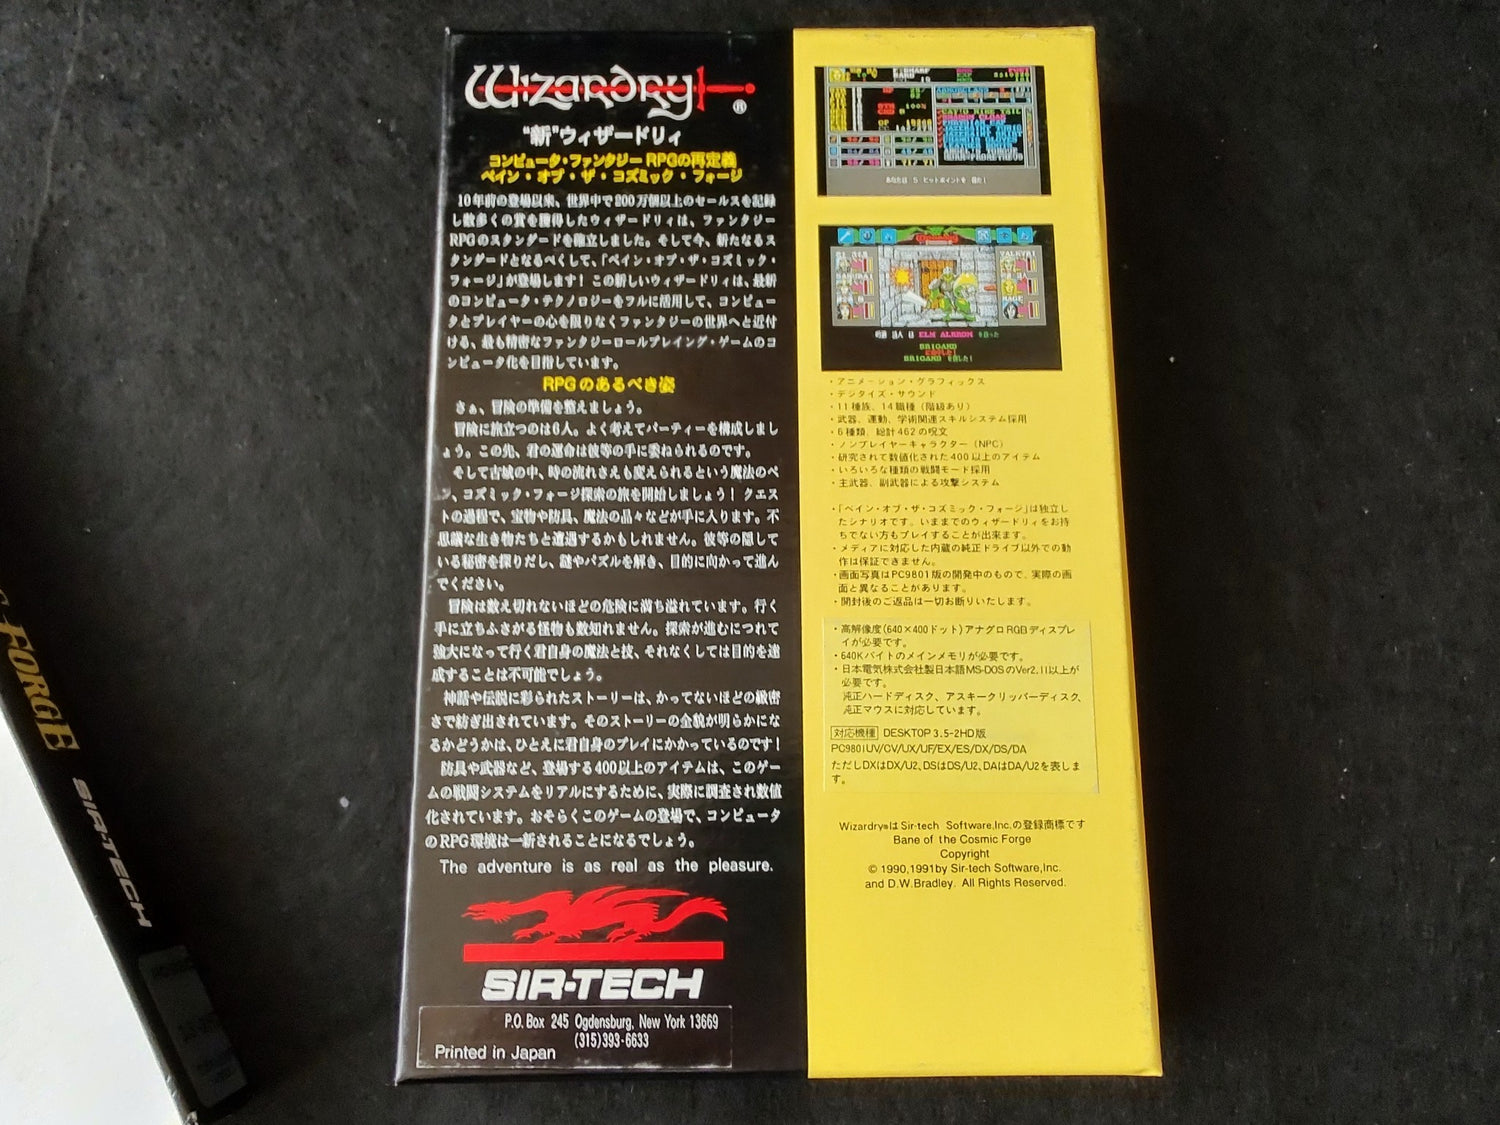 PC-9801 3.5 2DD Wizardry-